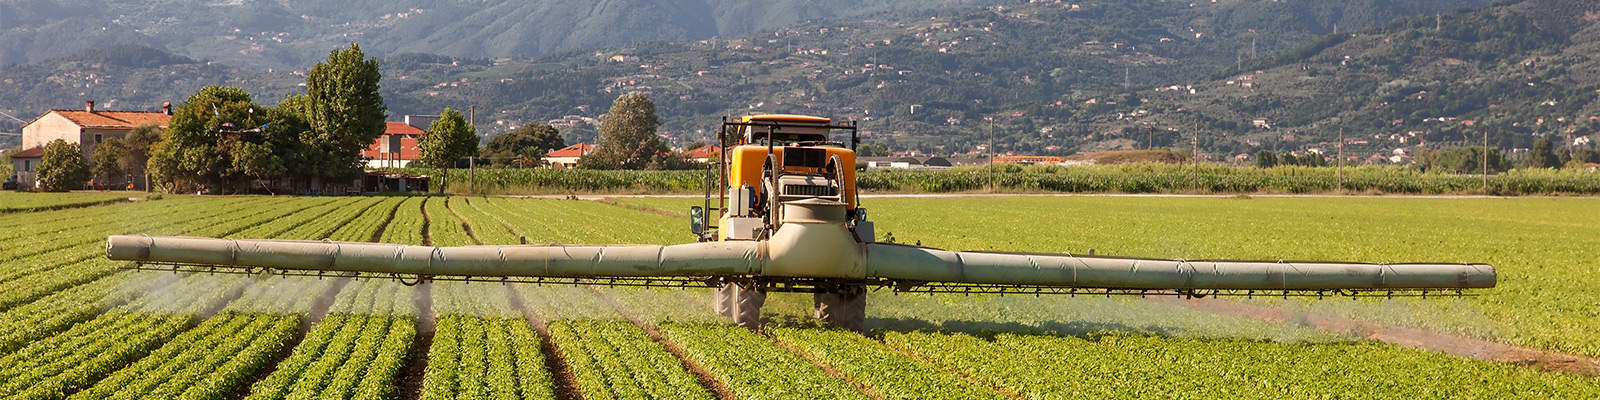 A tractor sprays crops